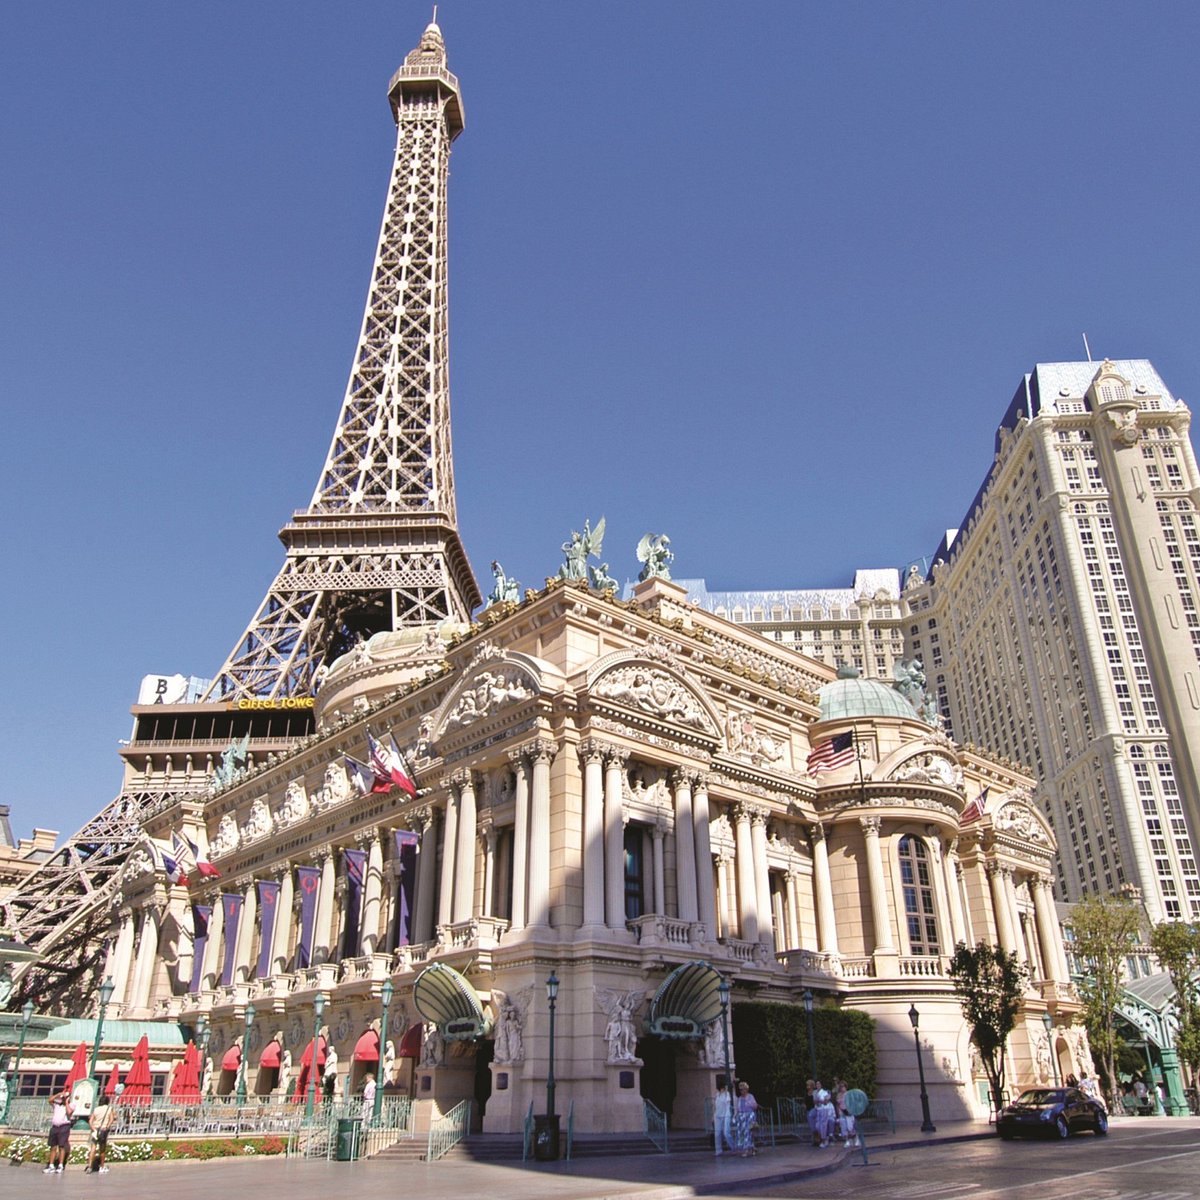 Eiffel Tower Viewing Deck - Las Vegas - Tickets